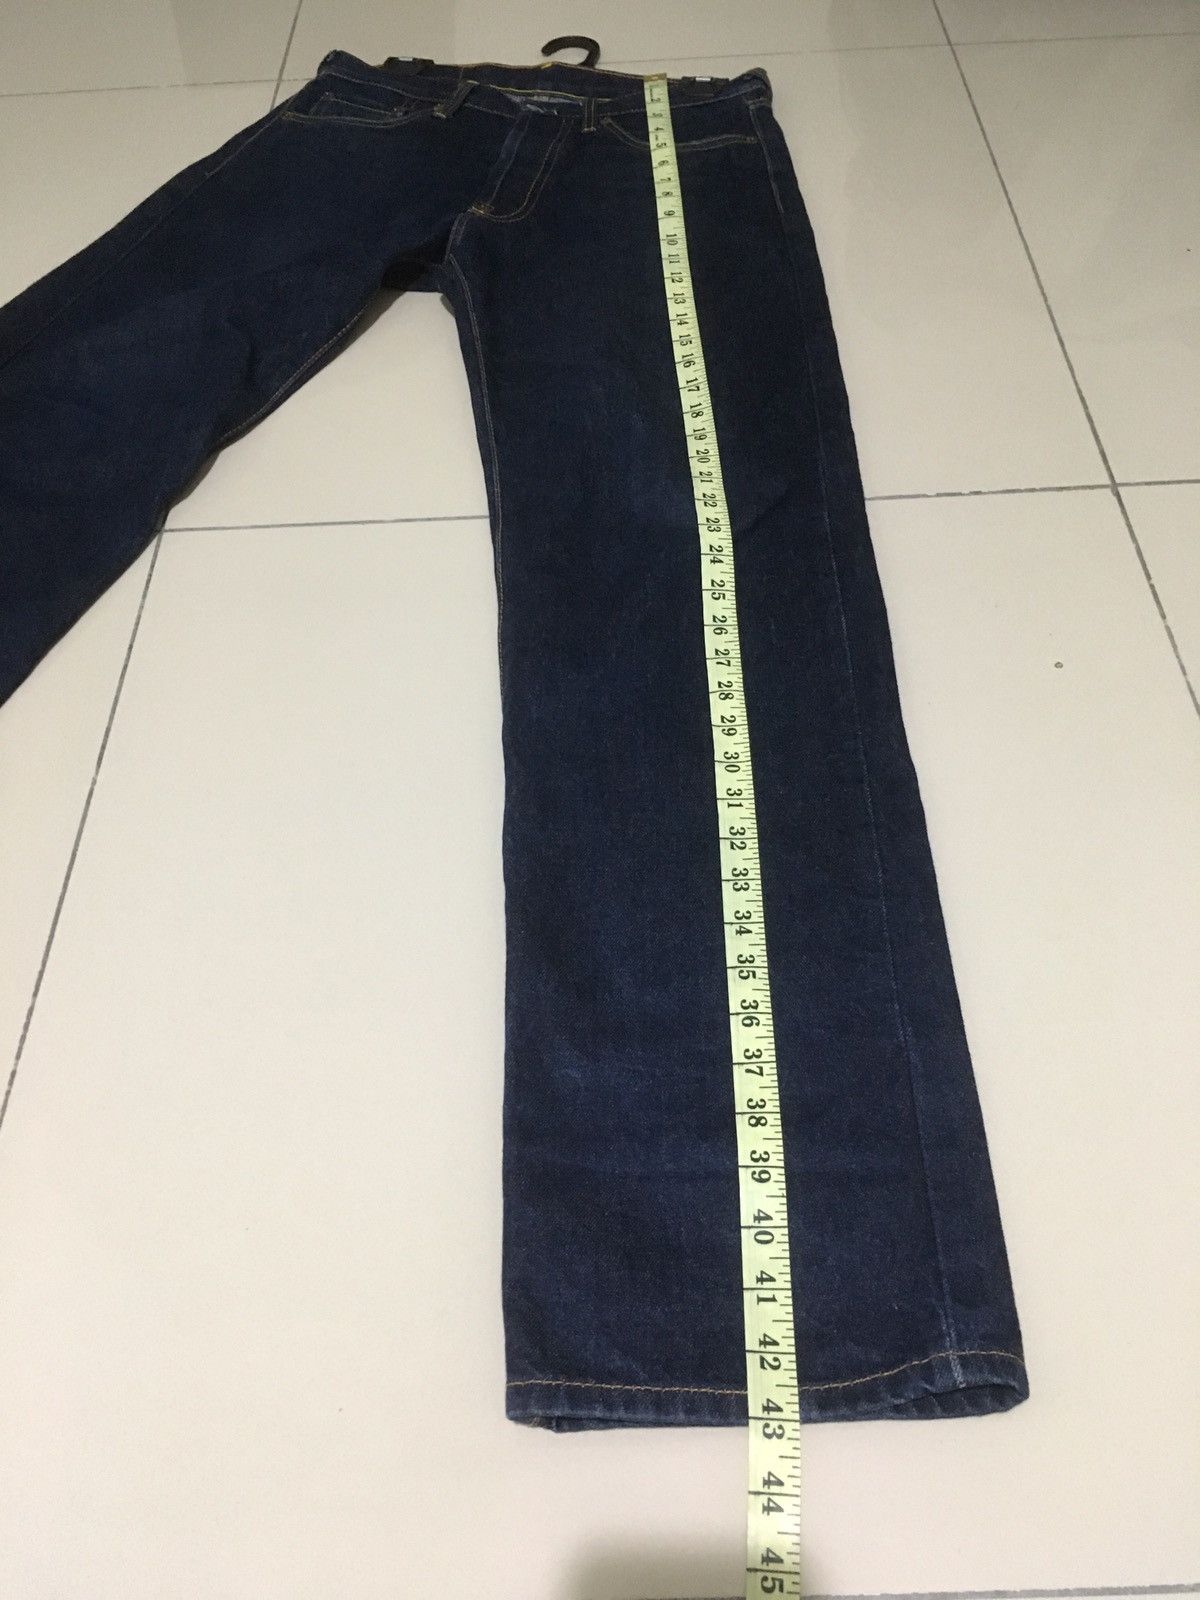 Evisu 🔥LAST DROP PRICE🔥Evisu Genes Osaka Denim Long Pants Size US 32 / EU 48 - 8 Thumbnail